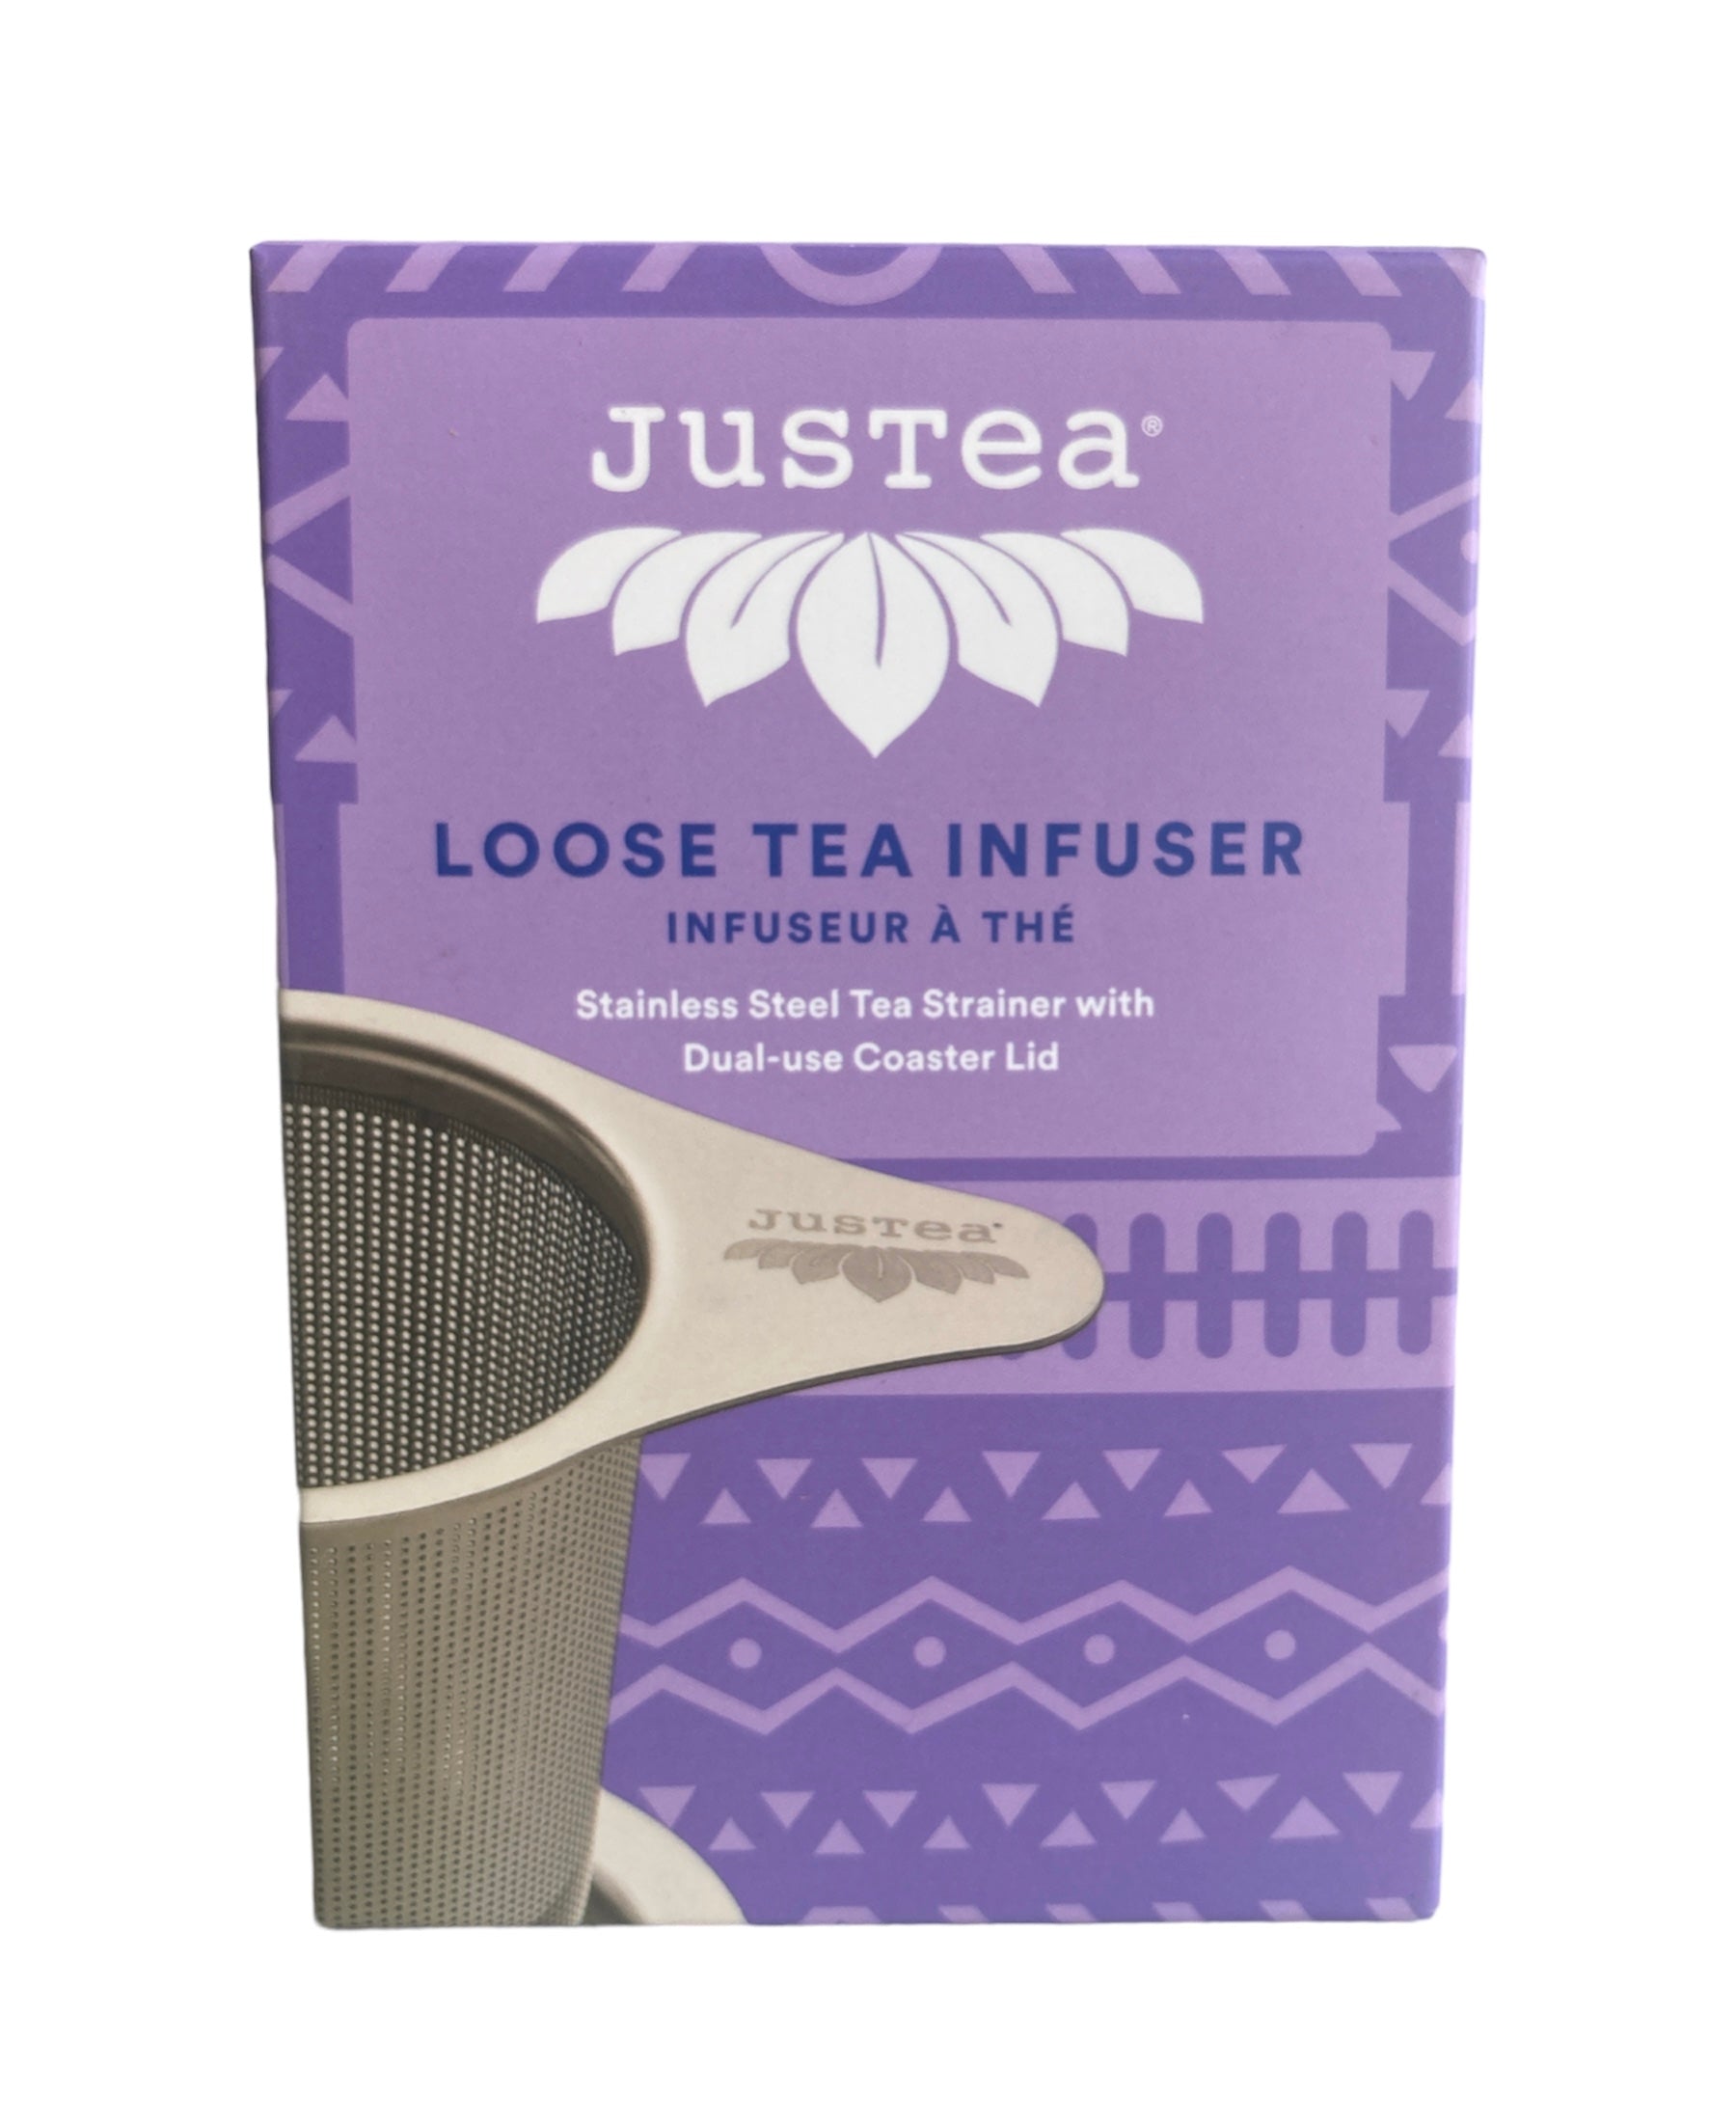 Loose-tea-infuser